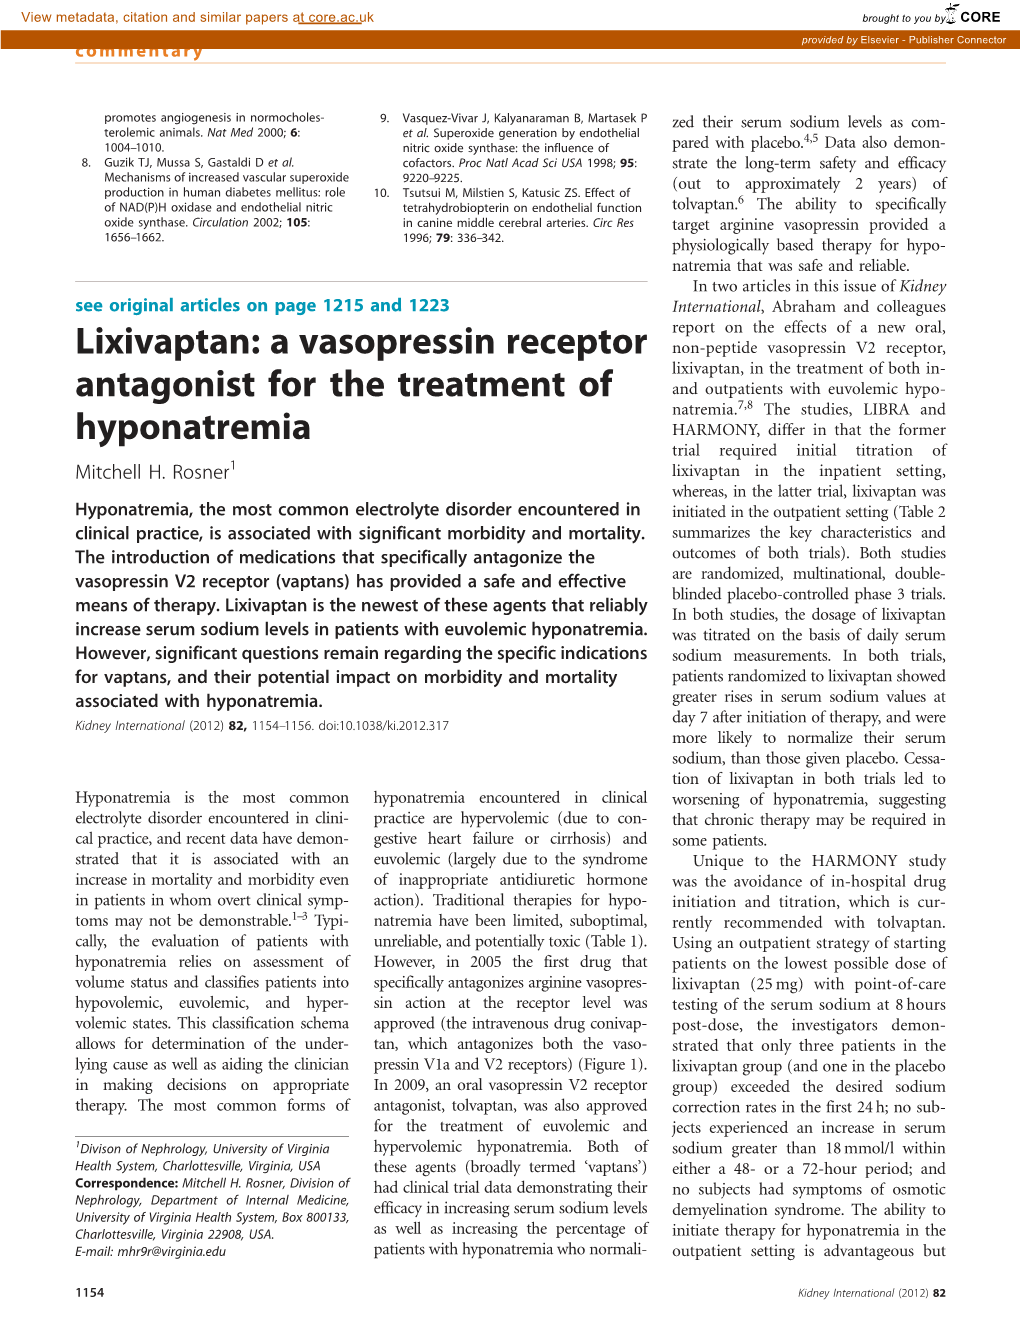 Lixivaptan: a Vasopressin Receptor Antagonist for the Treatment of Hyponatremia